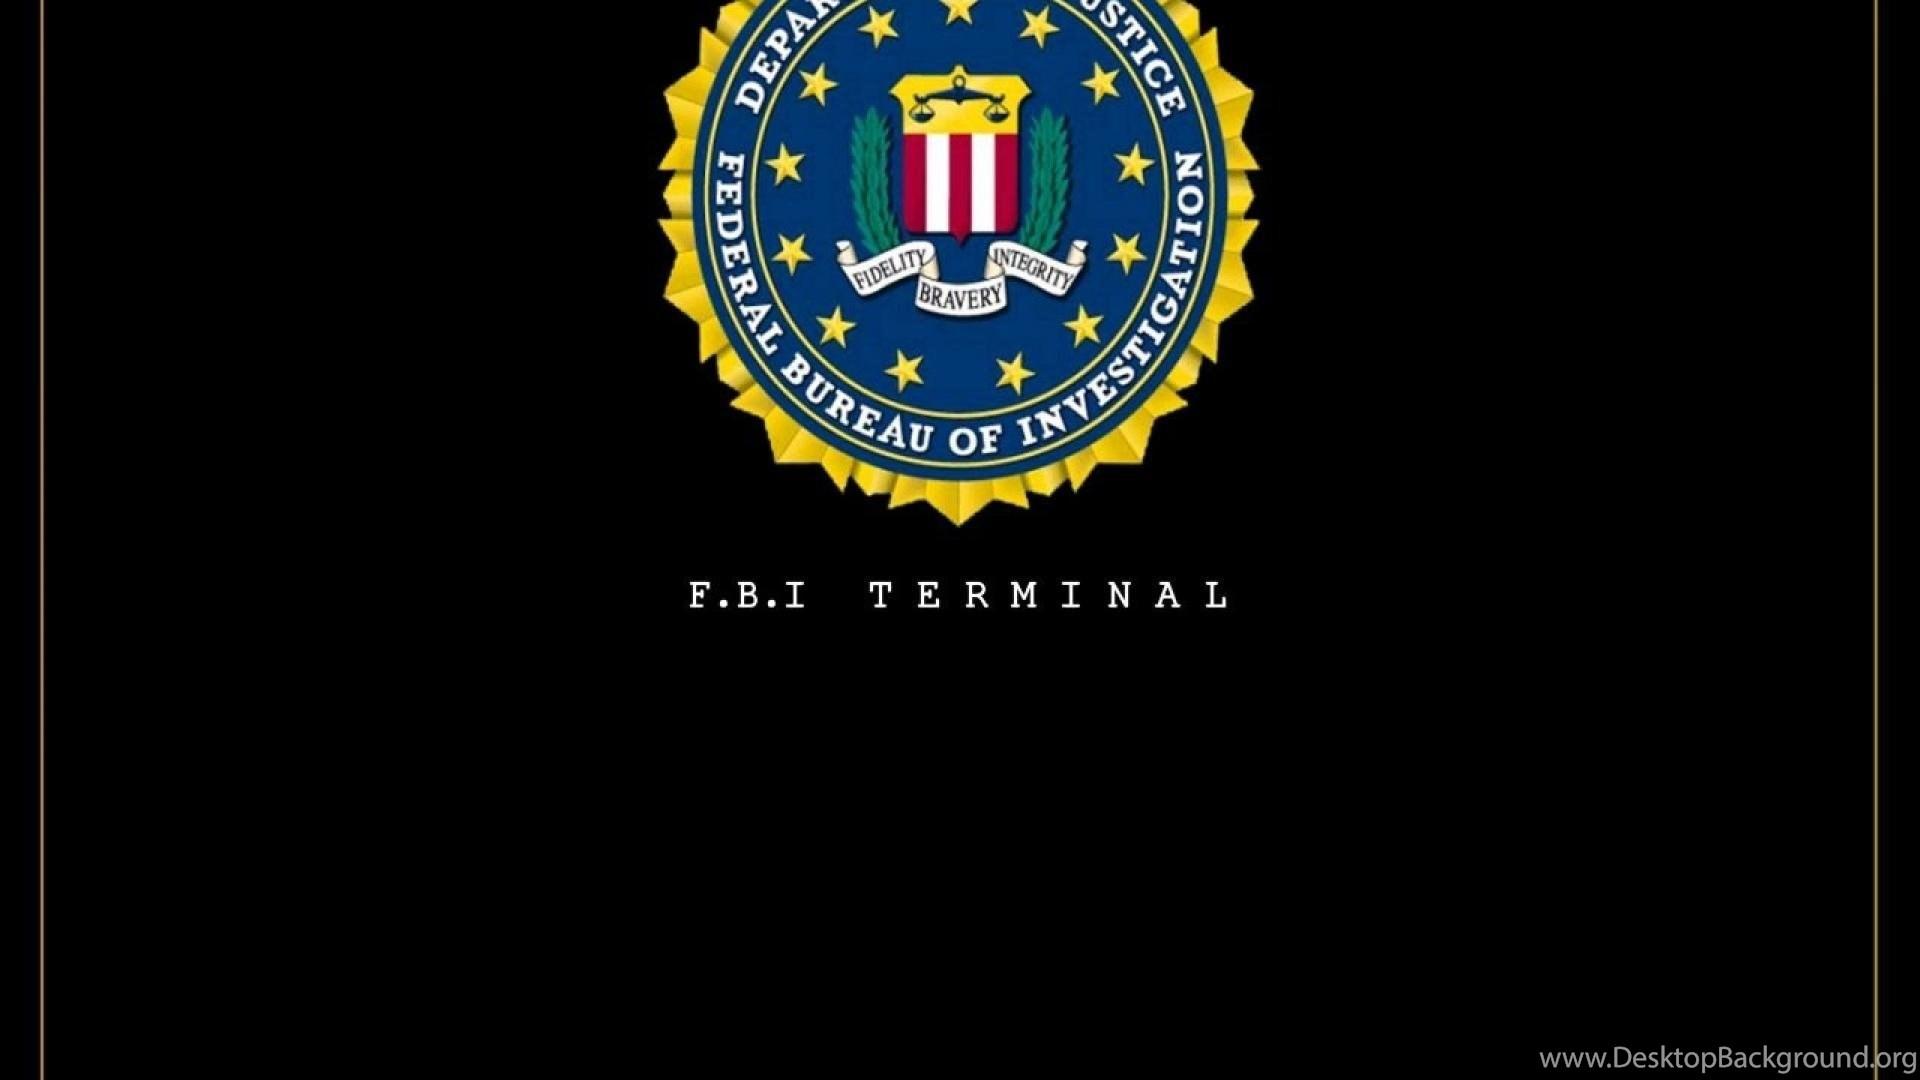 Cool FBI Wallpapers - Top Free Cool FBI